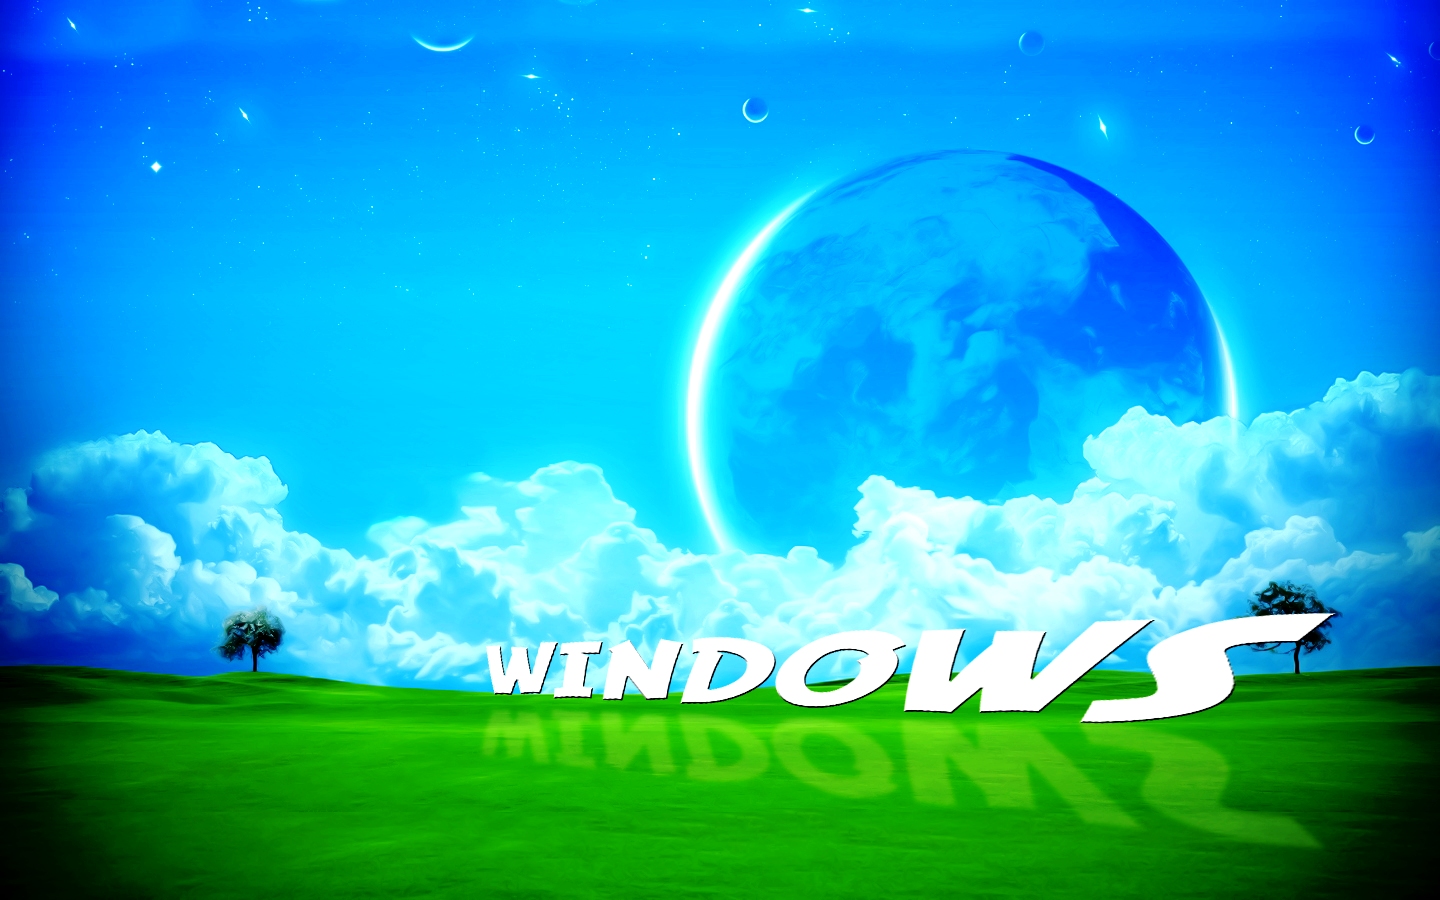 Windows wallpaper download,desktop wallpaper